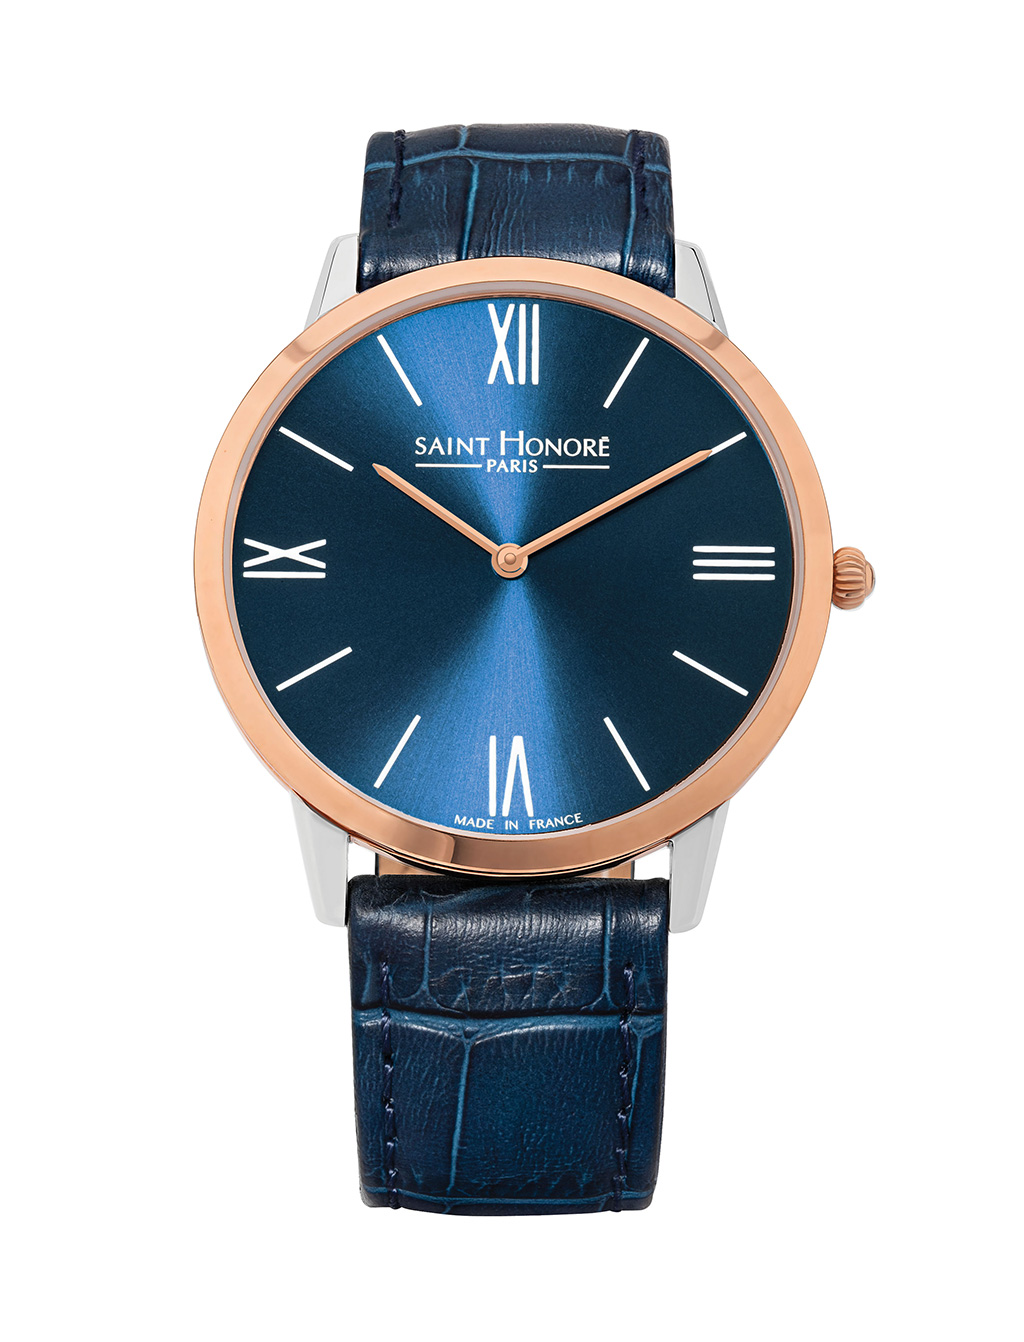 WAGRAM Men's watch - Stainless steel case, blue leather strap